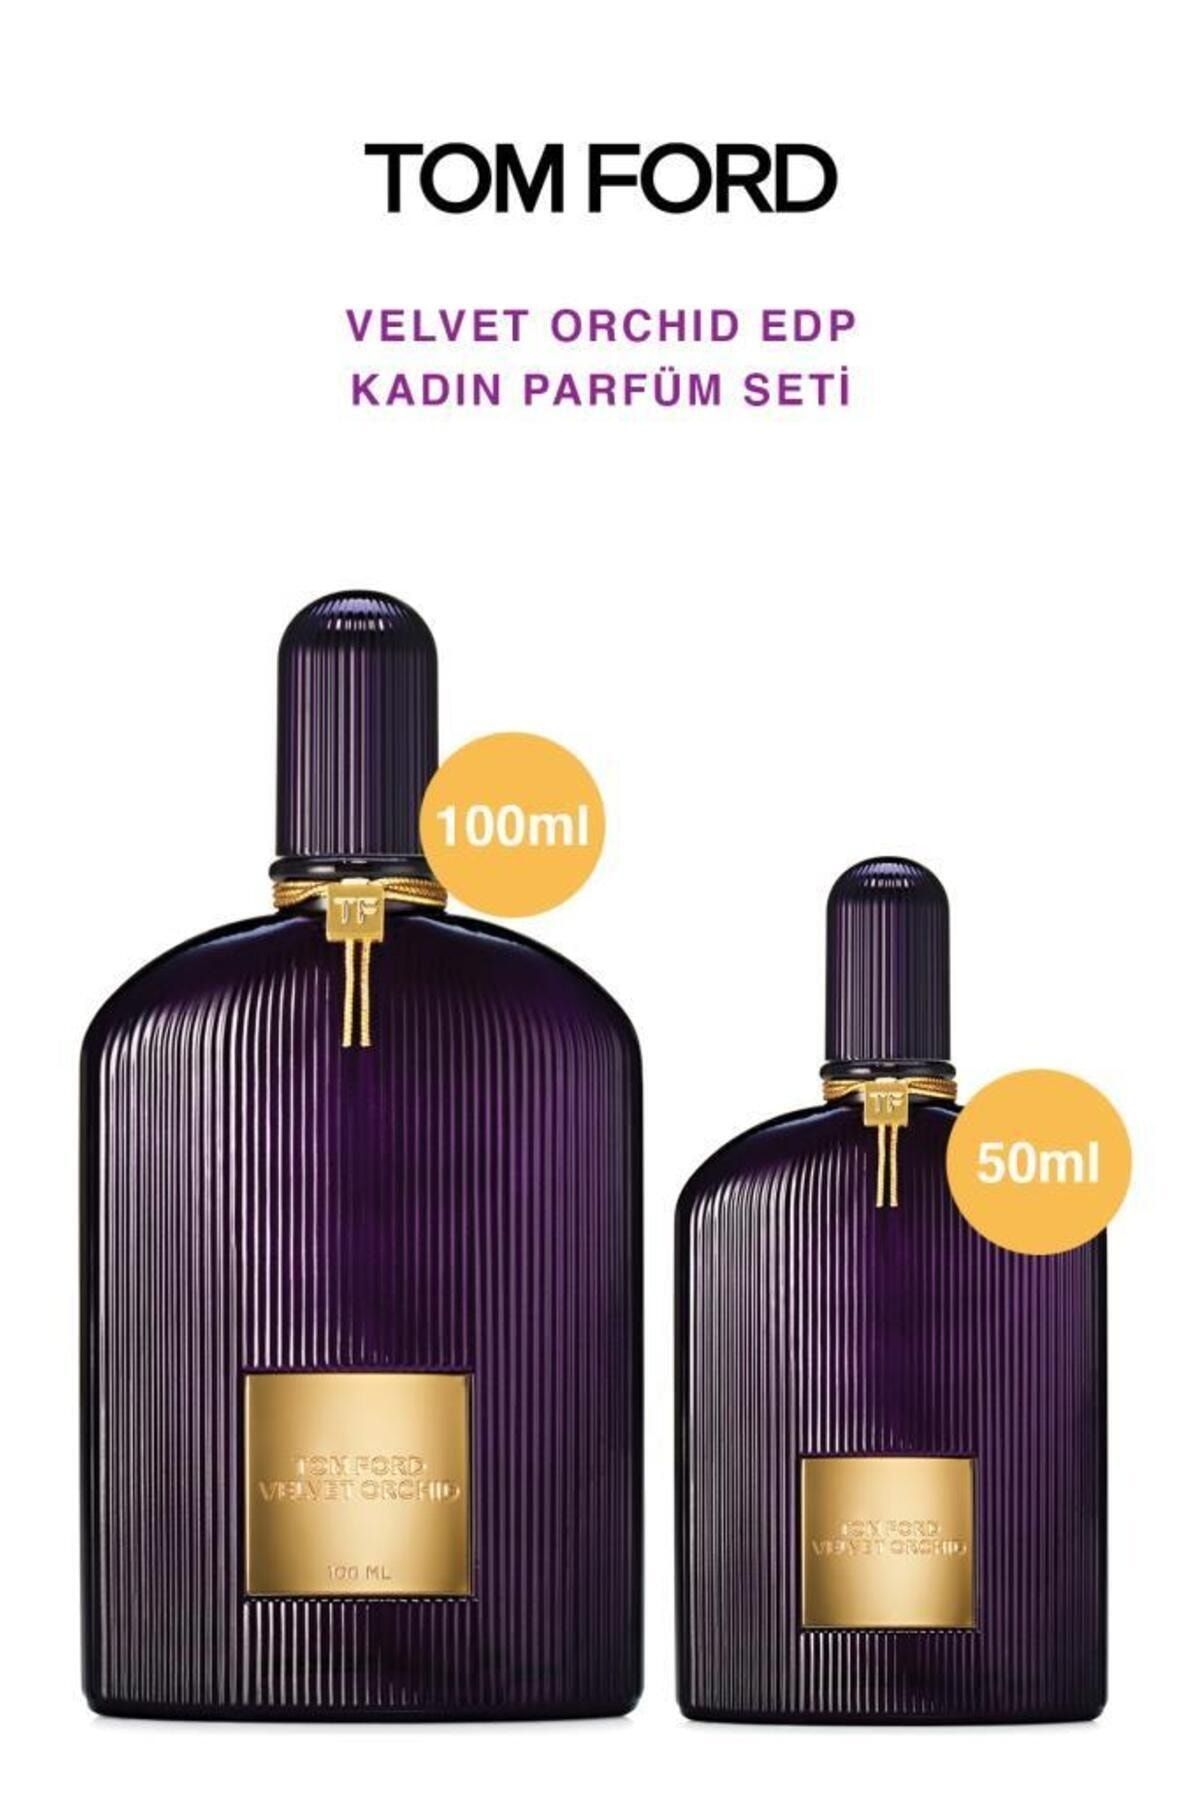 Tom Ford Velvet Orchid Modern-Seksi-Kalıcı-Kadın-Erkek Parfüm Seti 100 ve 50 ml Set